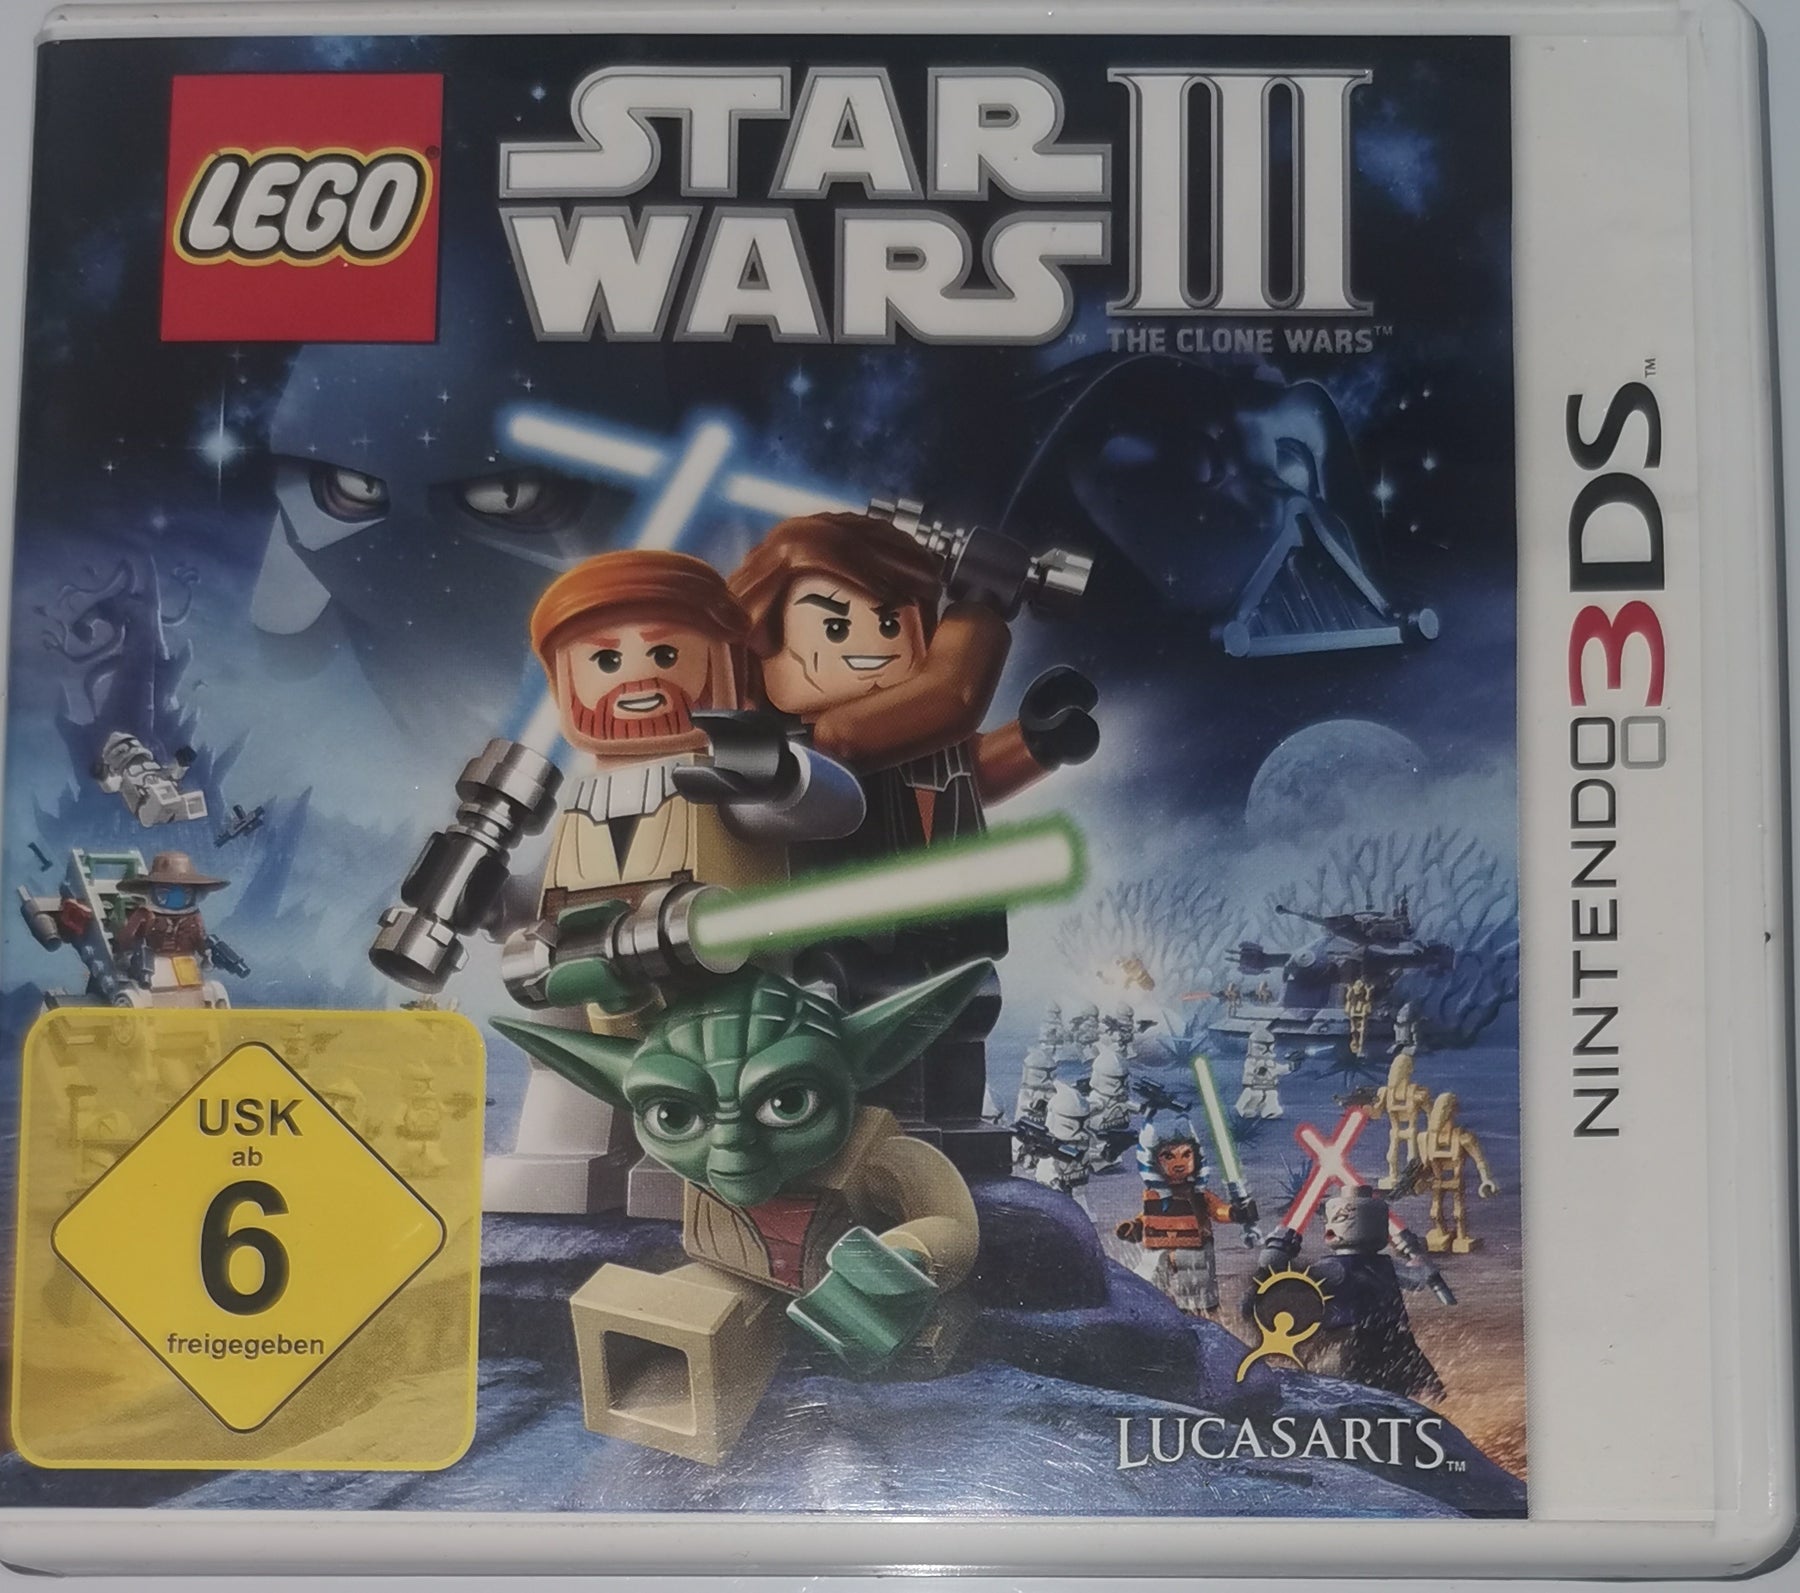 Lego Star Wars 3 The Clone Wars Software Pyramide Nintendo DS (Nintendo 3DS) [Gut]